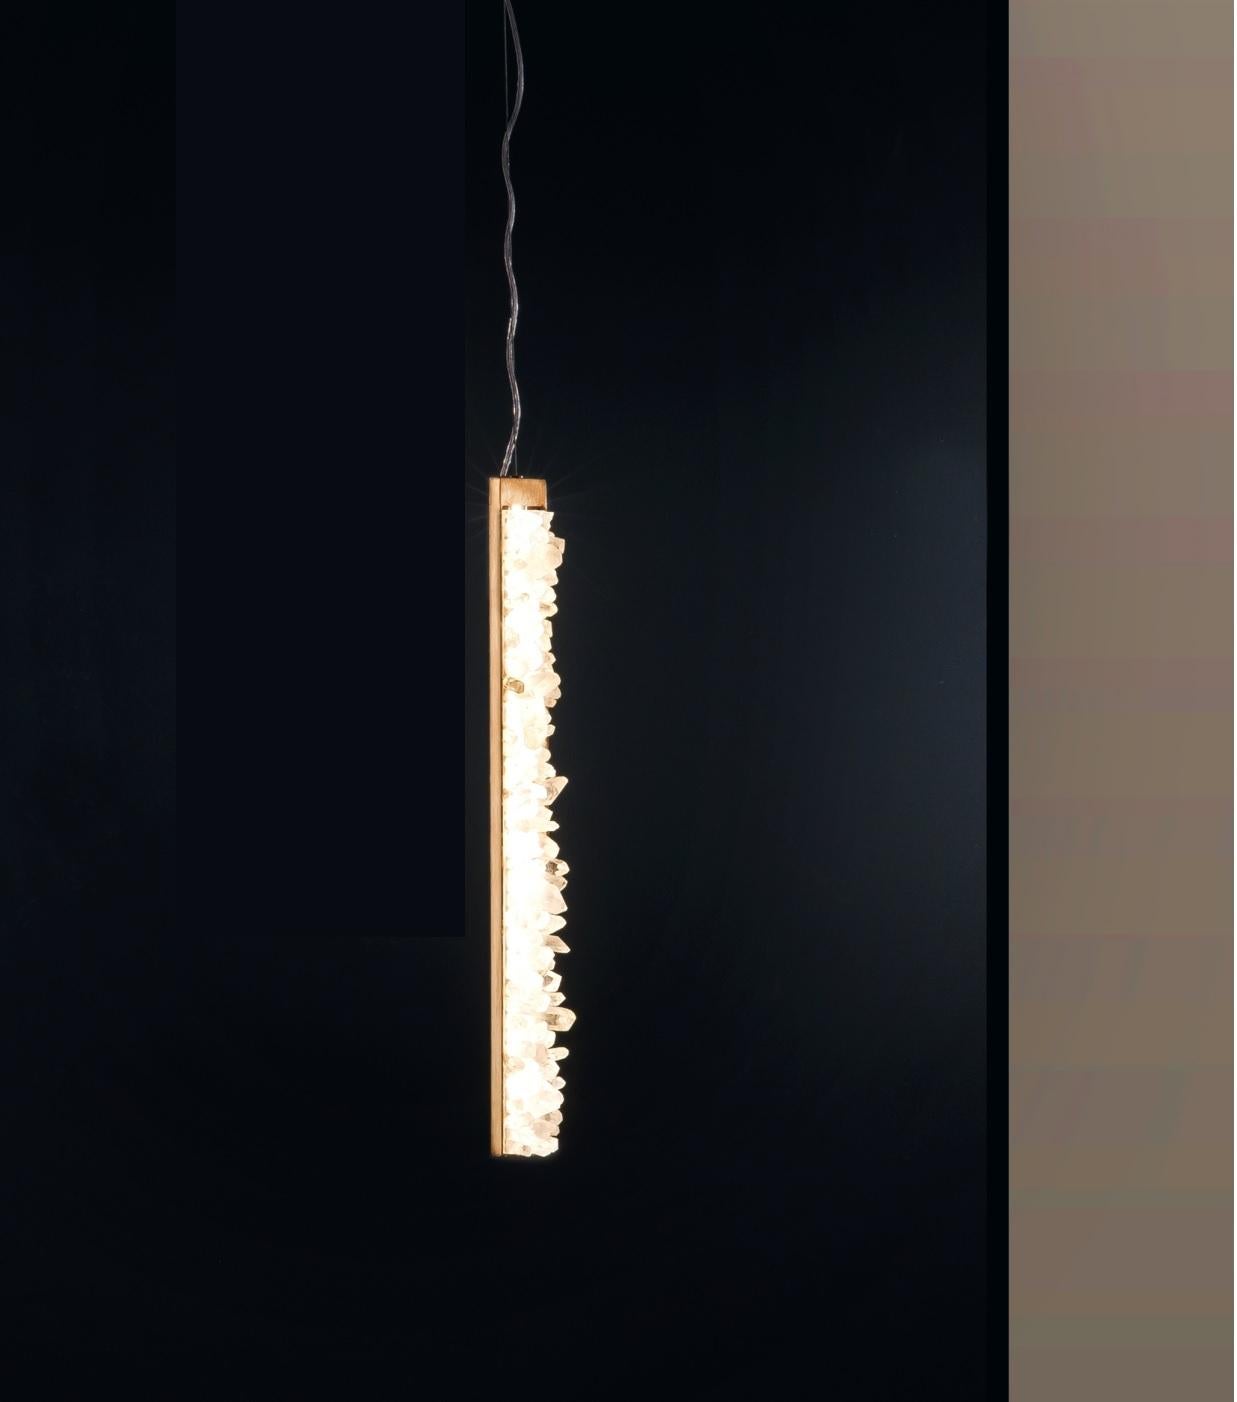 Carbonite linea vertical pendant lamp
Signed by Waldir Junior
Dimensions: D 10 x W 5 x H 62 cm 
Materials: Aluminum, antique Bronze finish. Natural White Quartz and Smoky Quartz.
Lighting: 01 x 10W LED 800 lumens.
Finish: Silver Veneer, Aged